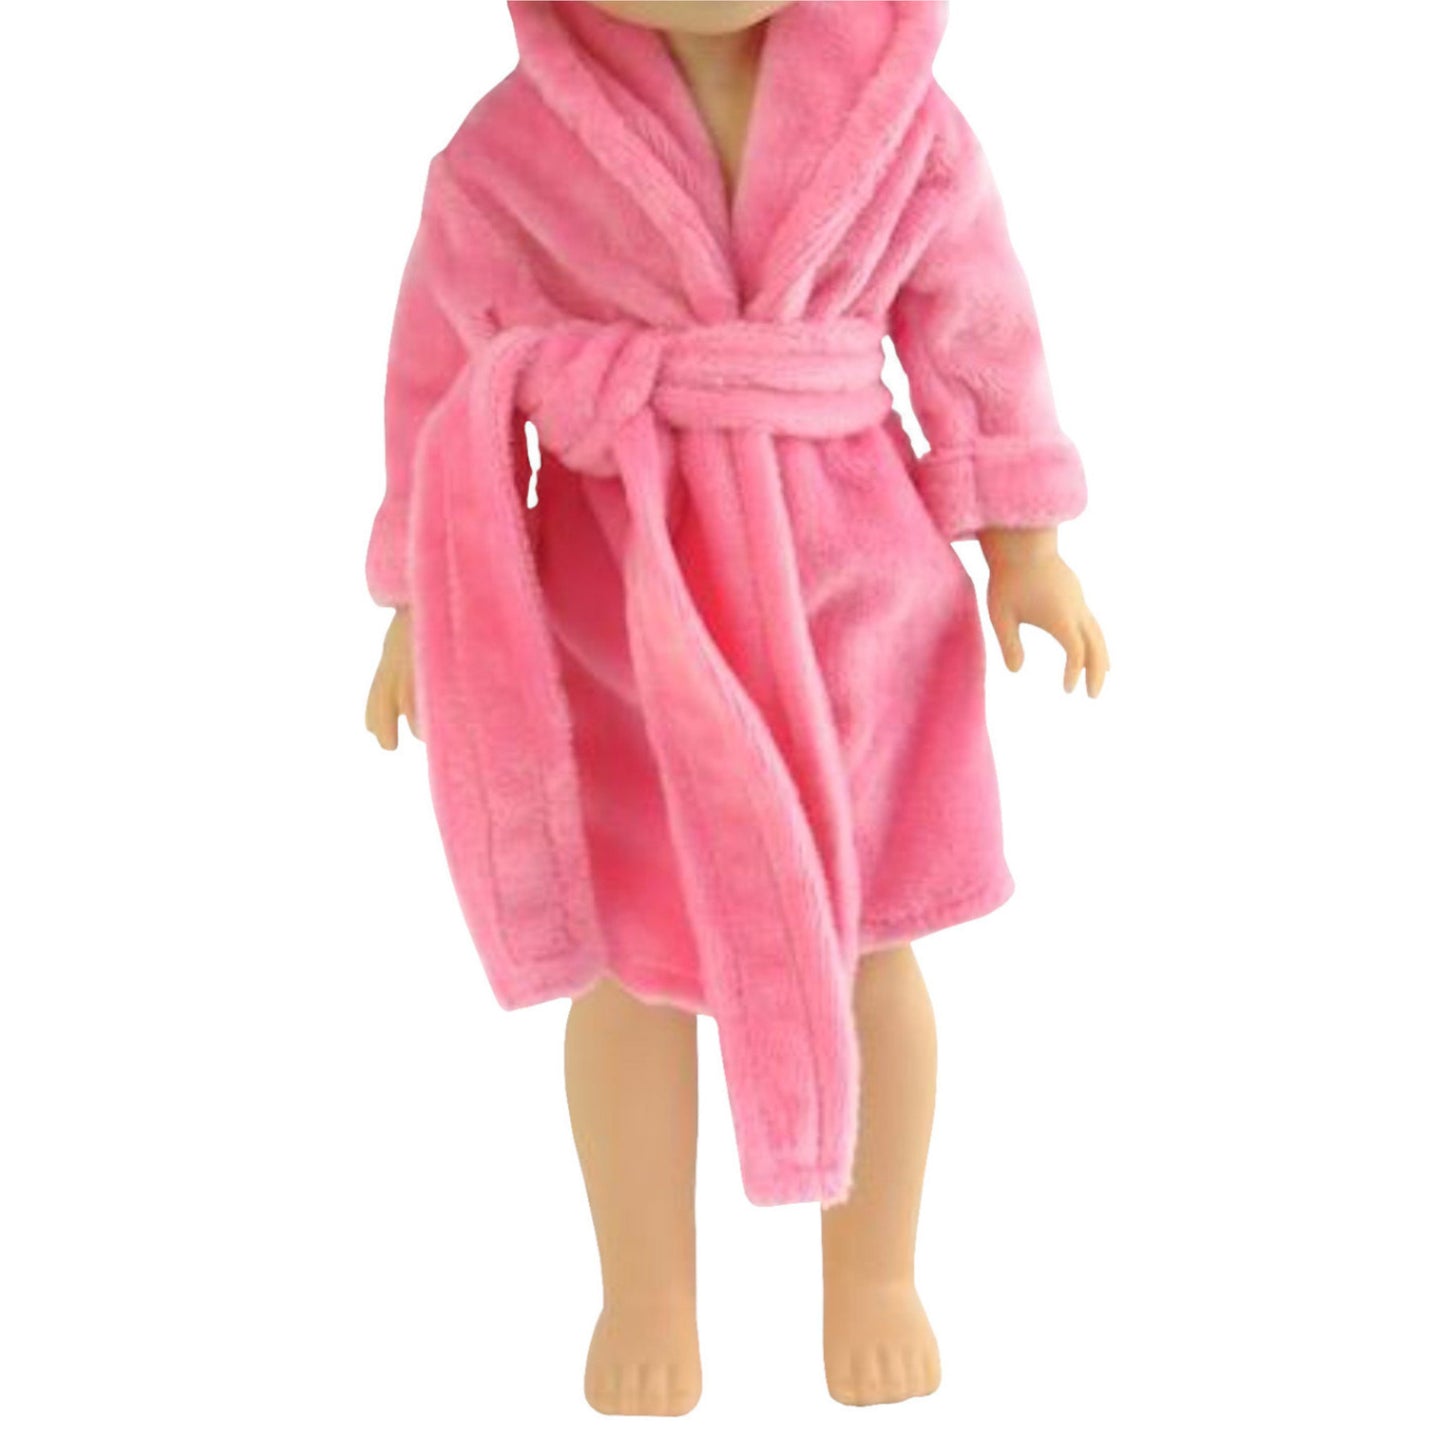 Pink Bathrobe for 14 1/2-inch dolls with doll